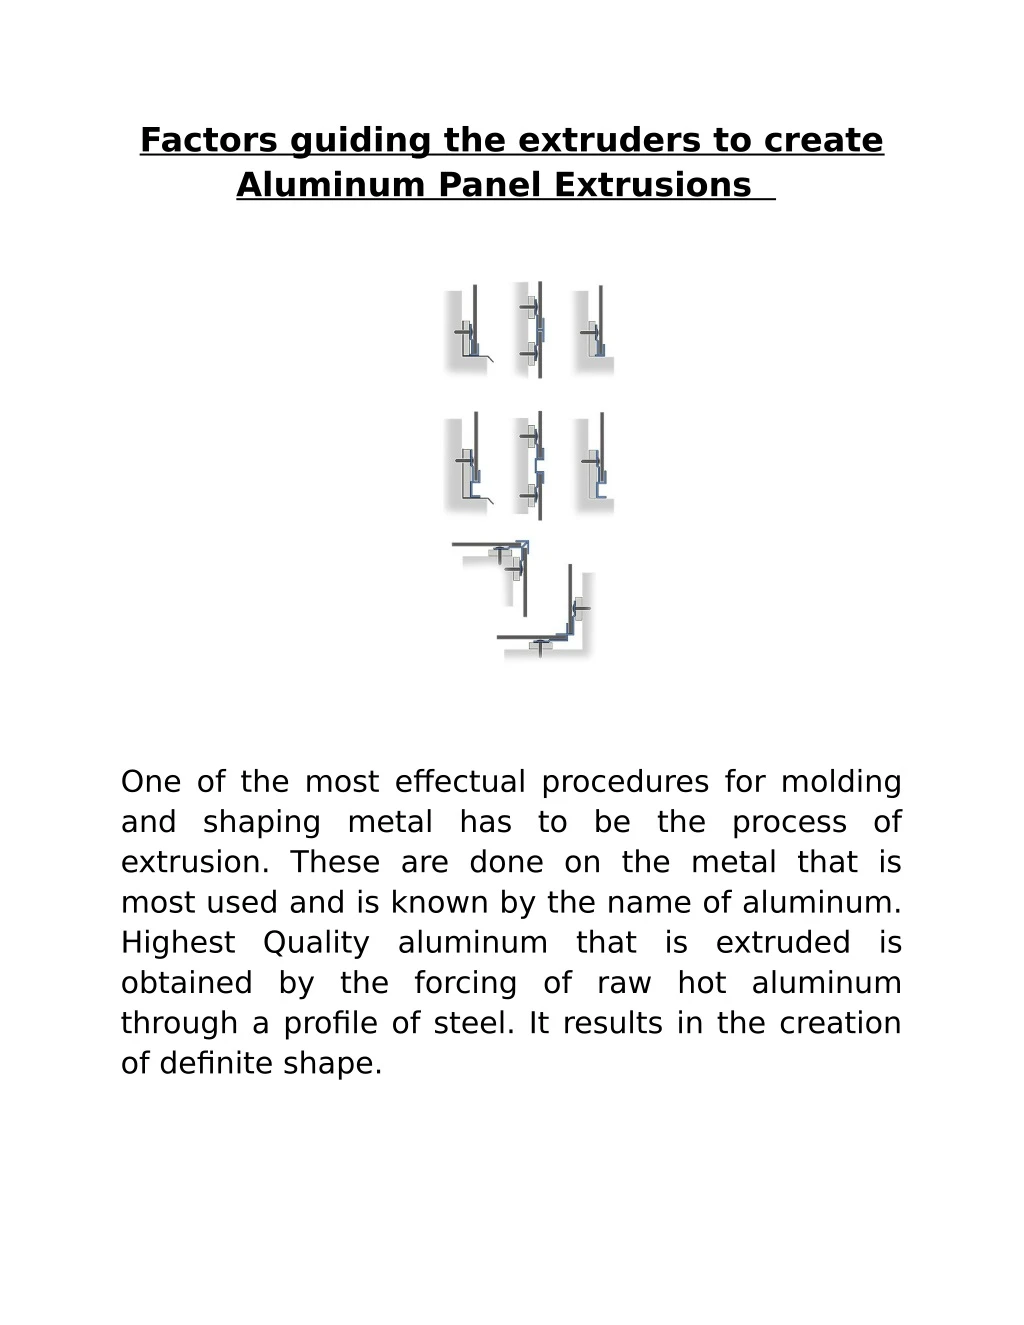 factors guiding the extruders to create aluminum